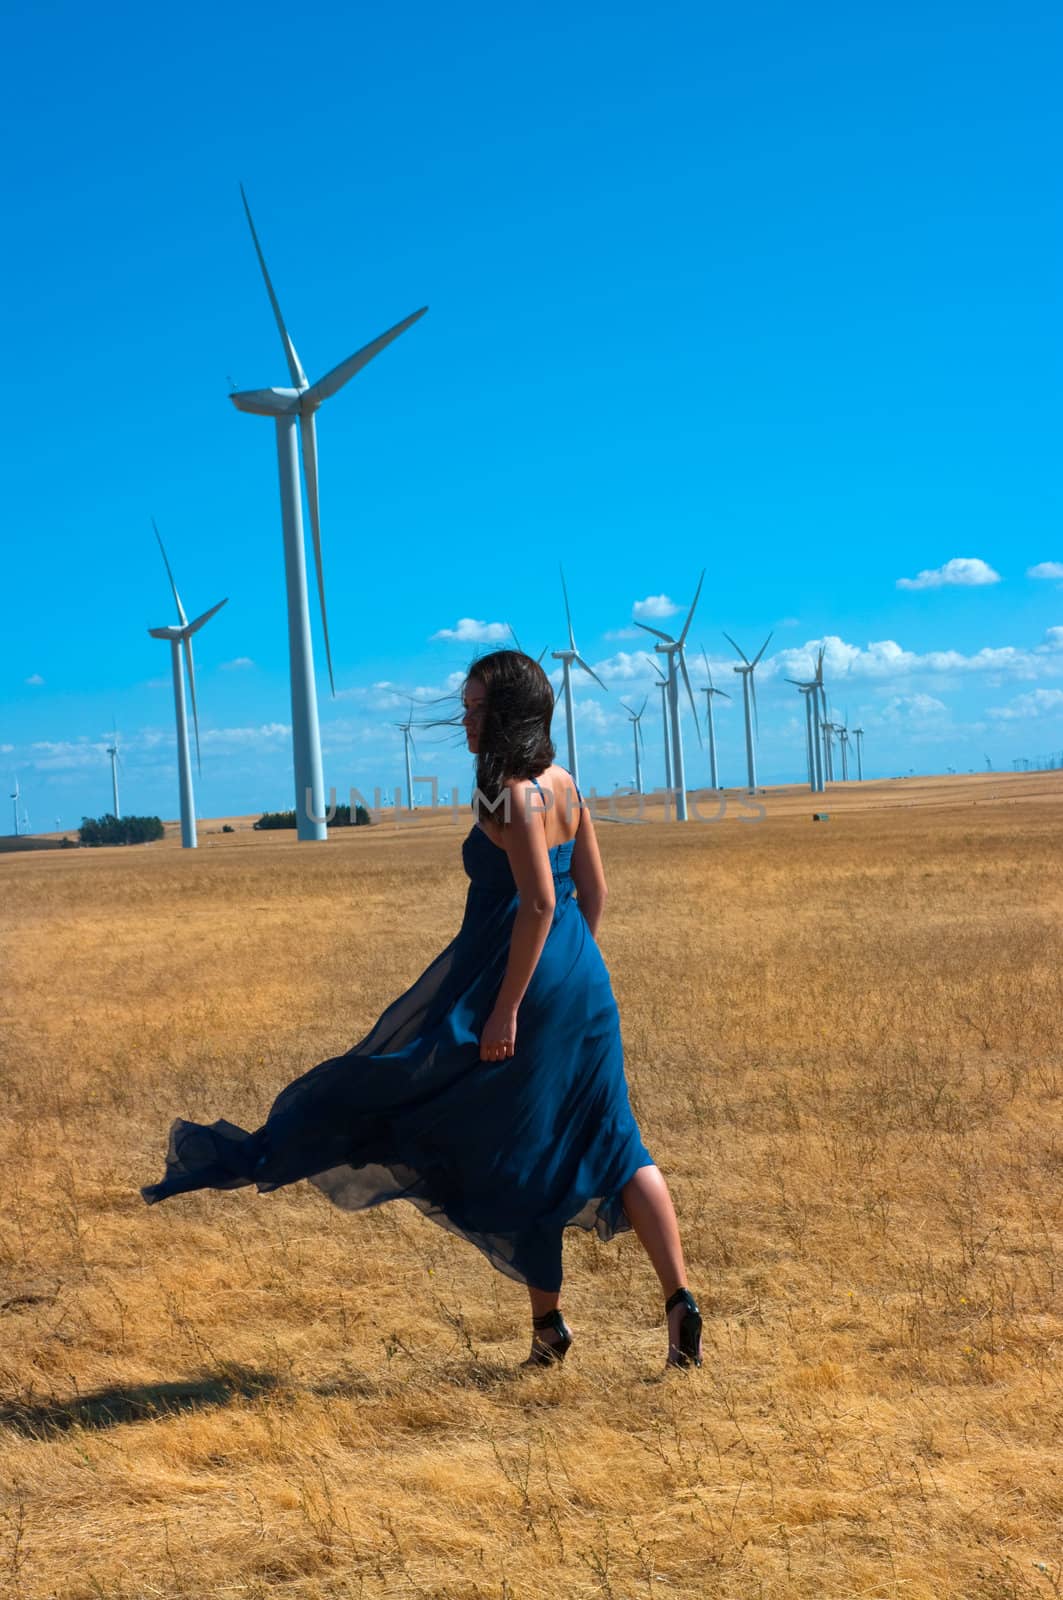 Girl with a designer silk dress on a farm near the wind turbines. 

